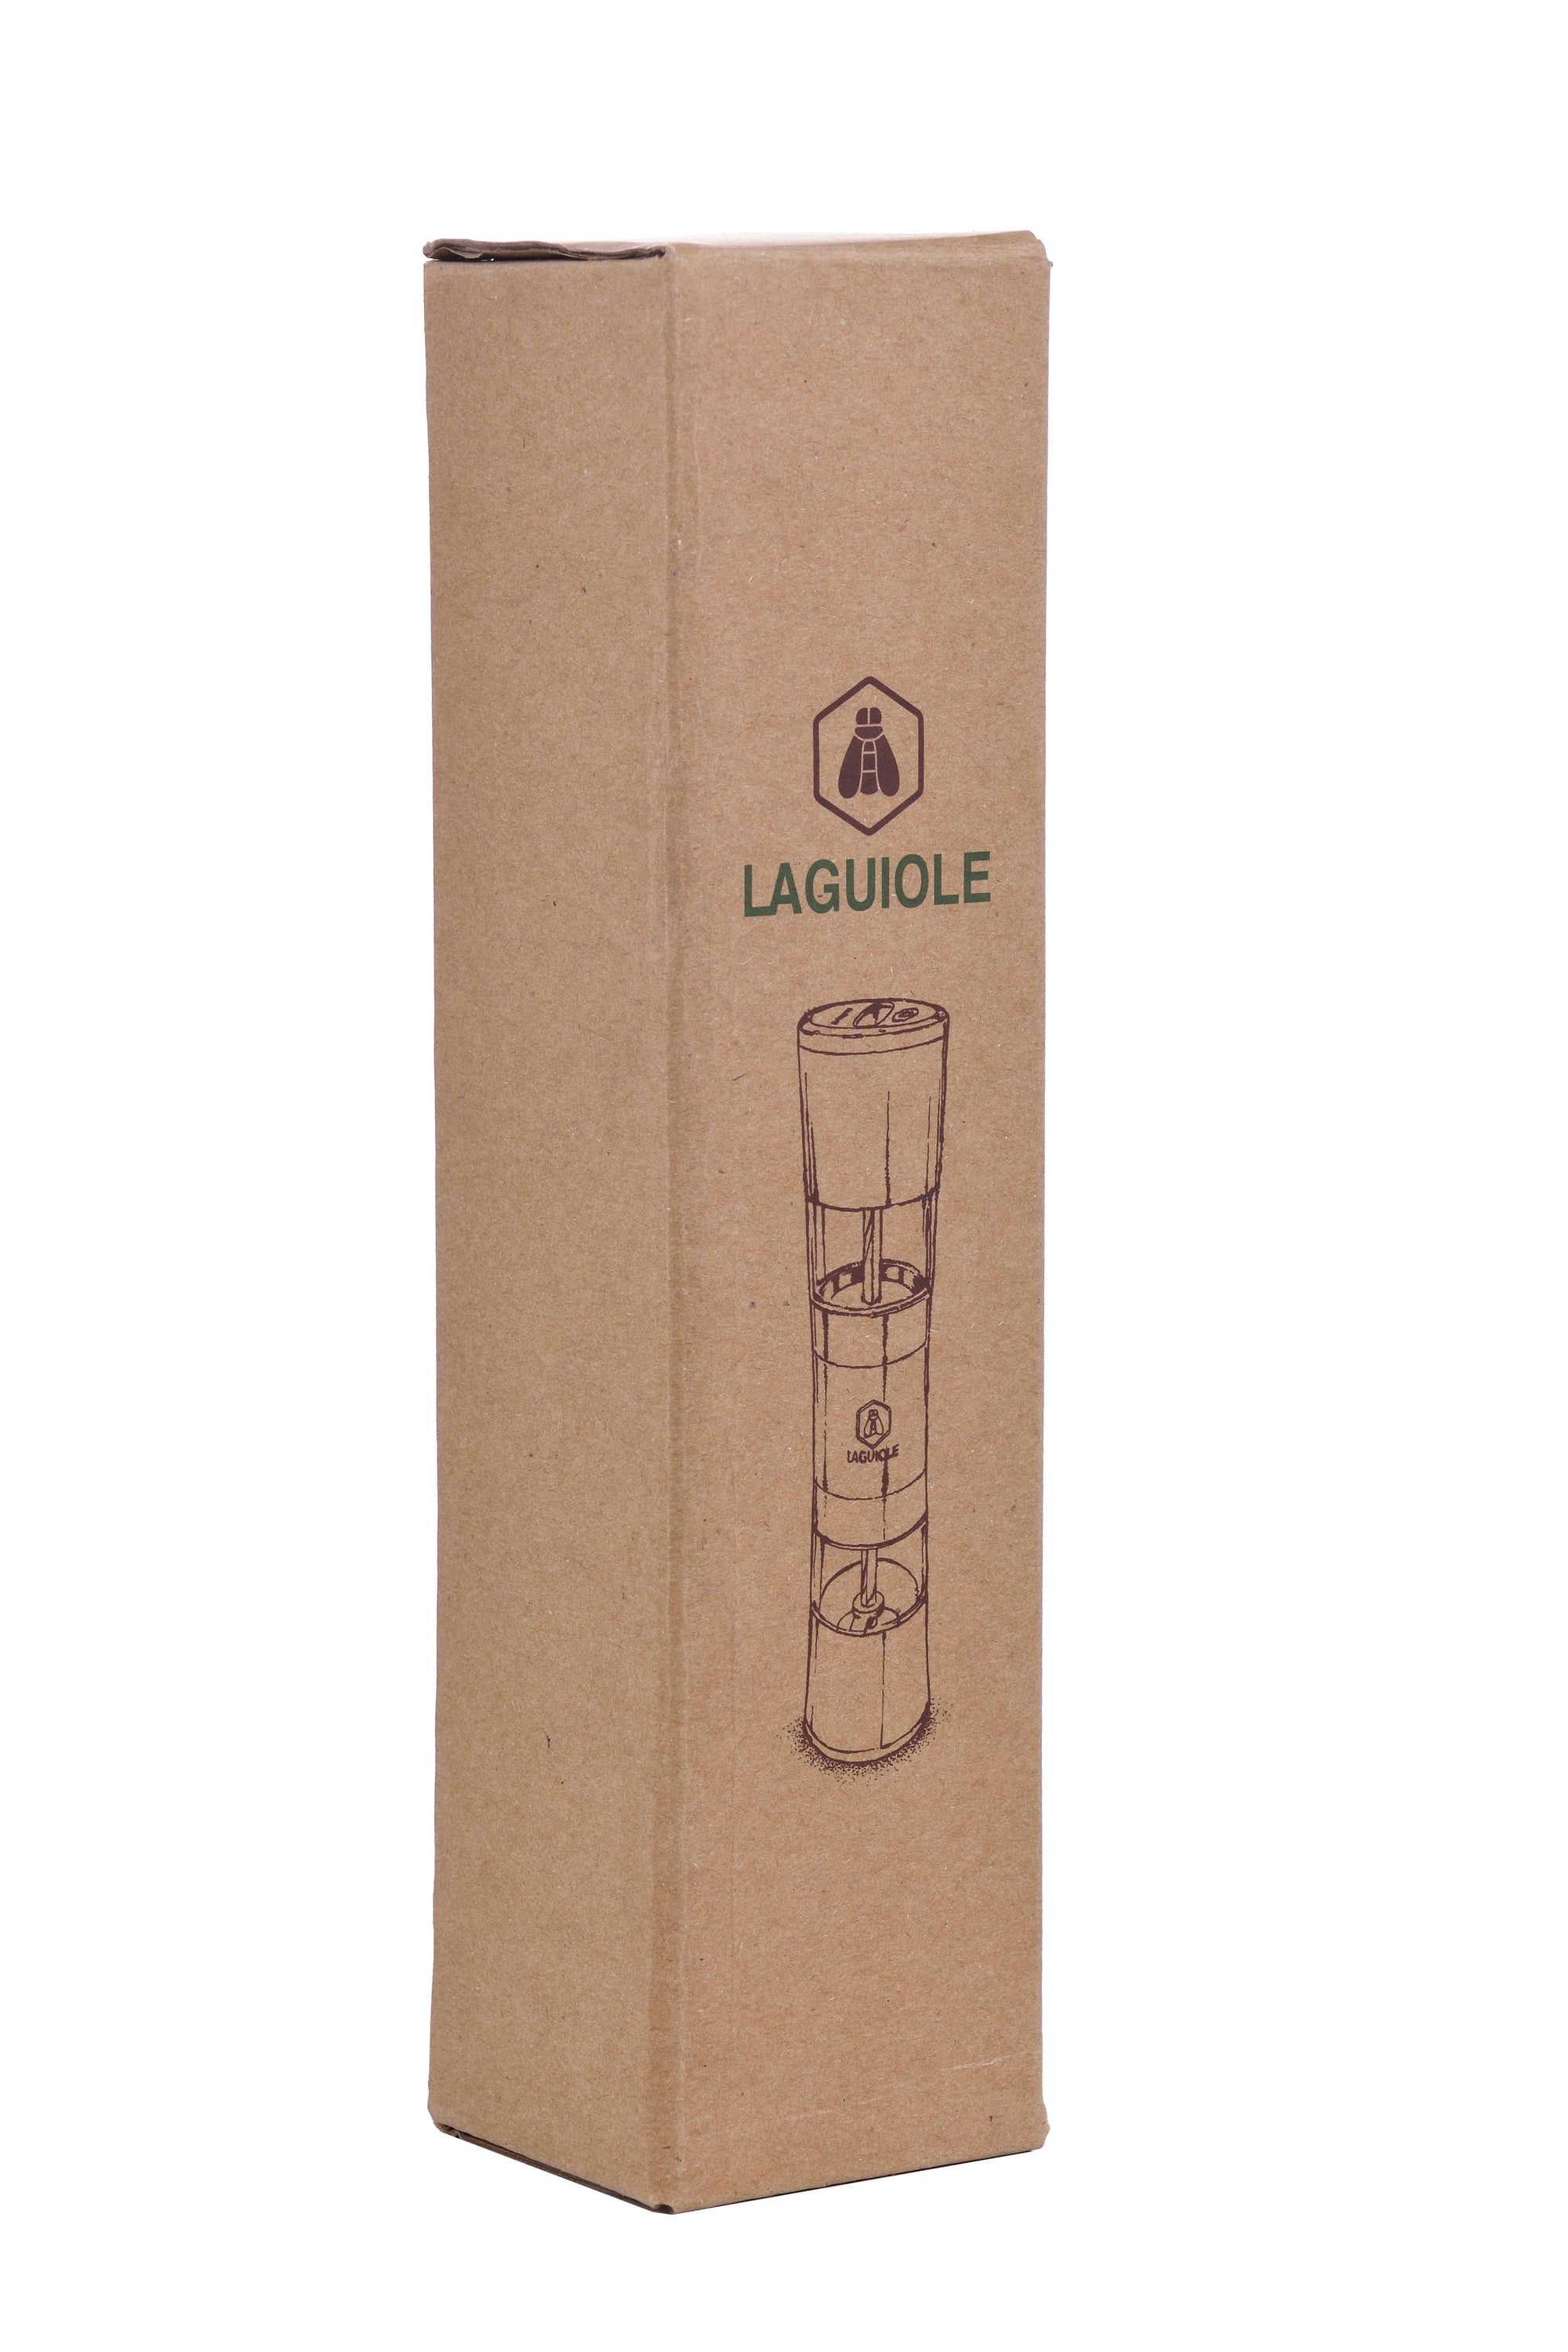 Laguiole - Manual salt and pepper mill